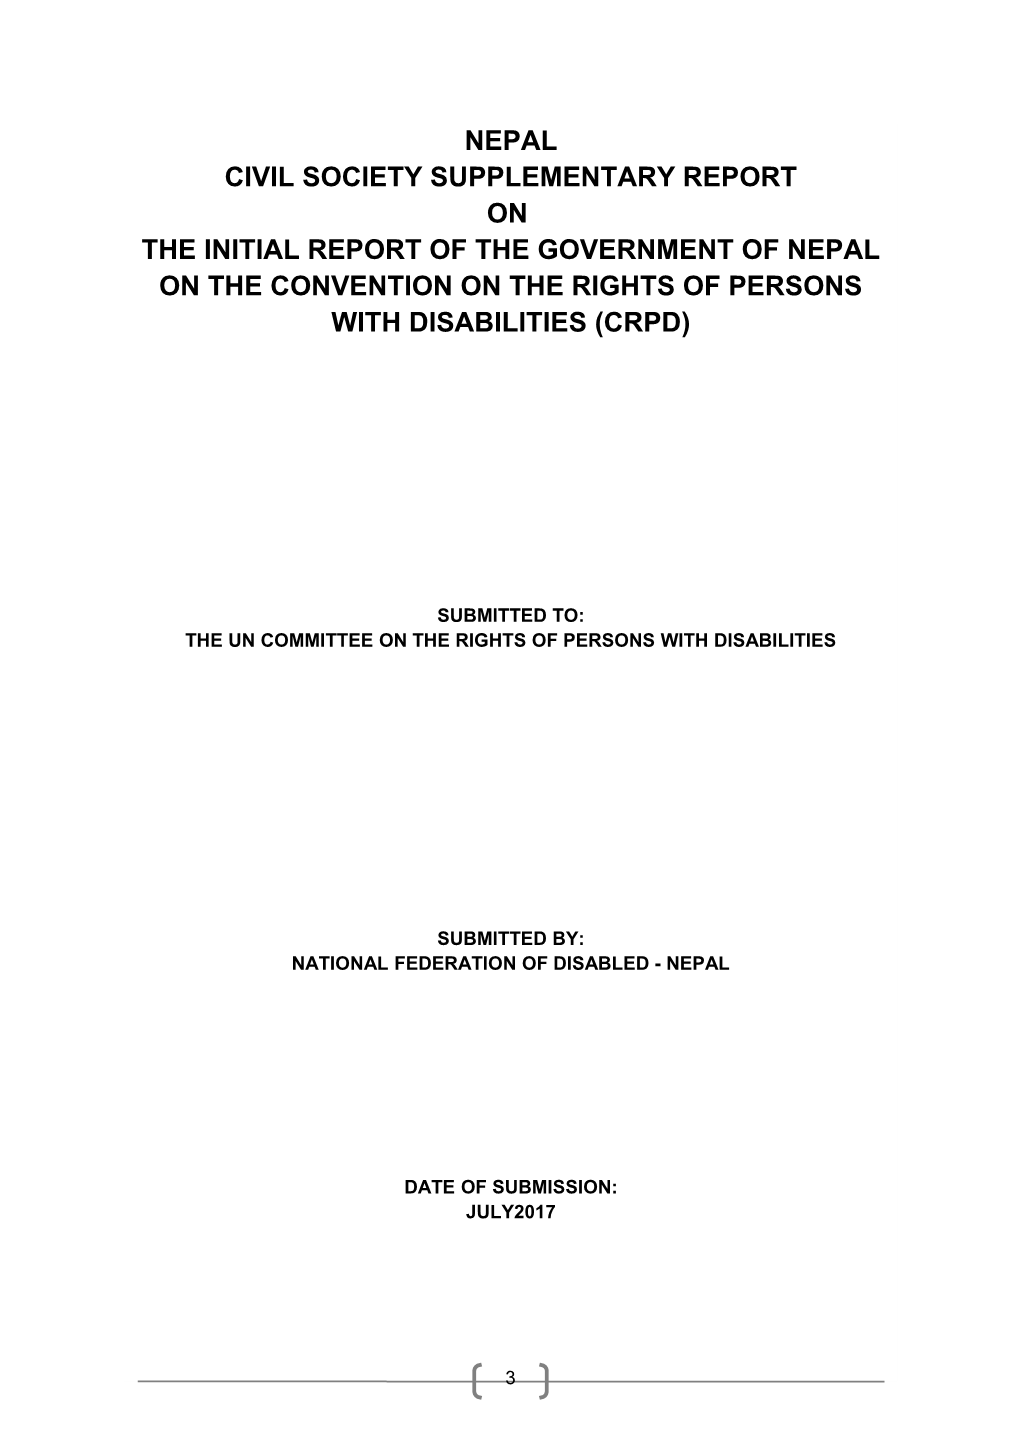 Civil Society Supplementary Report